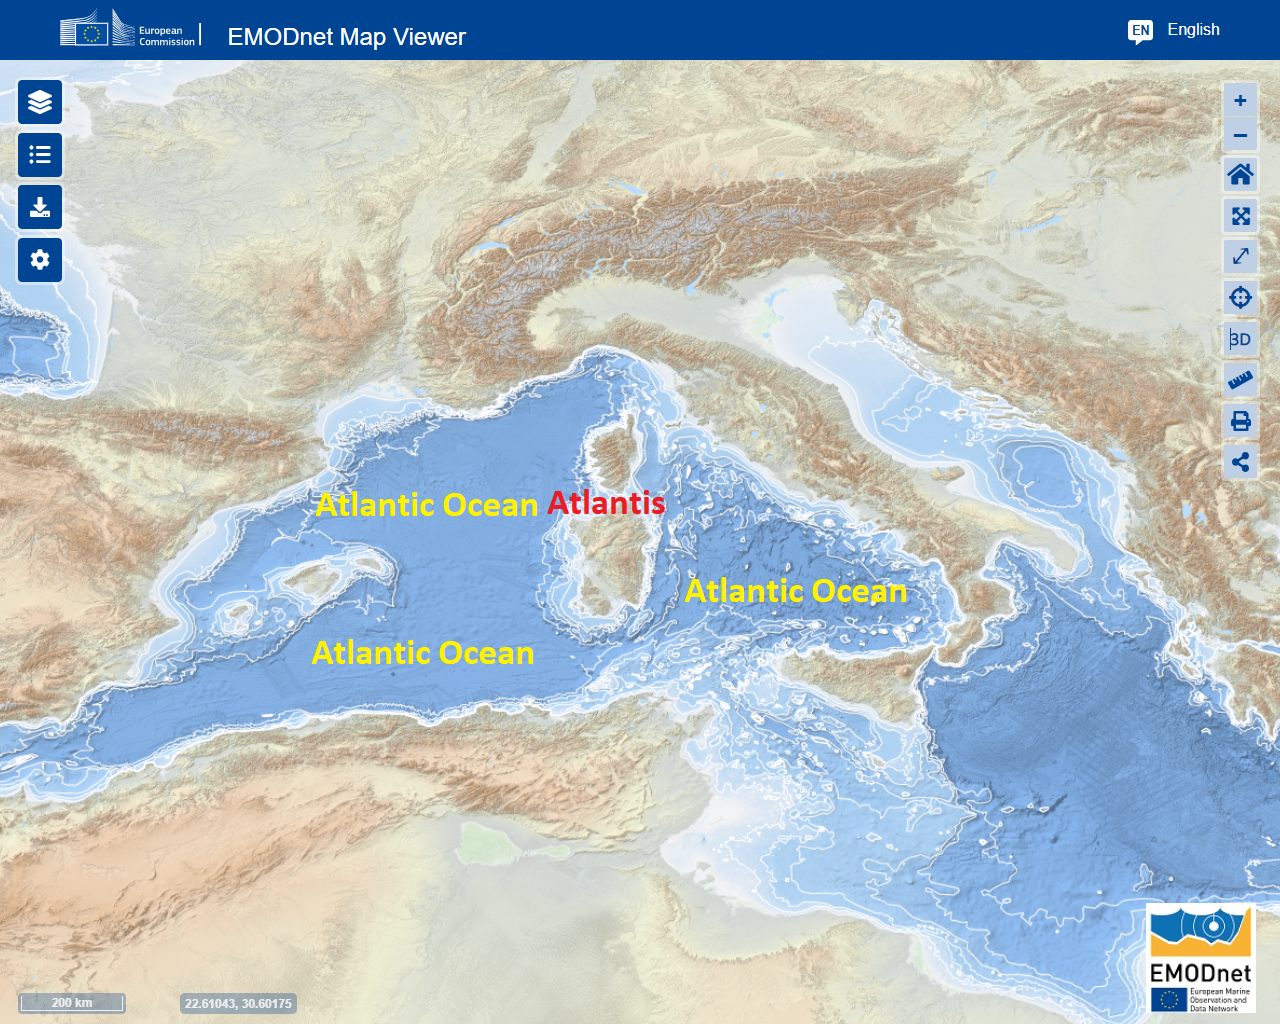 Atlantis in the Mesolithic Atlantic Ocean now called the Mediterranean Sea